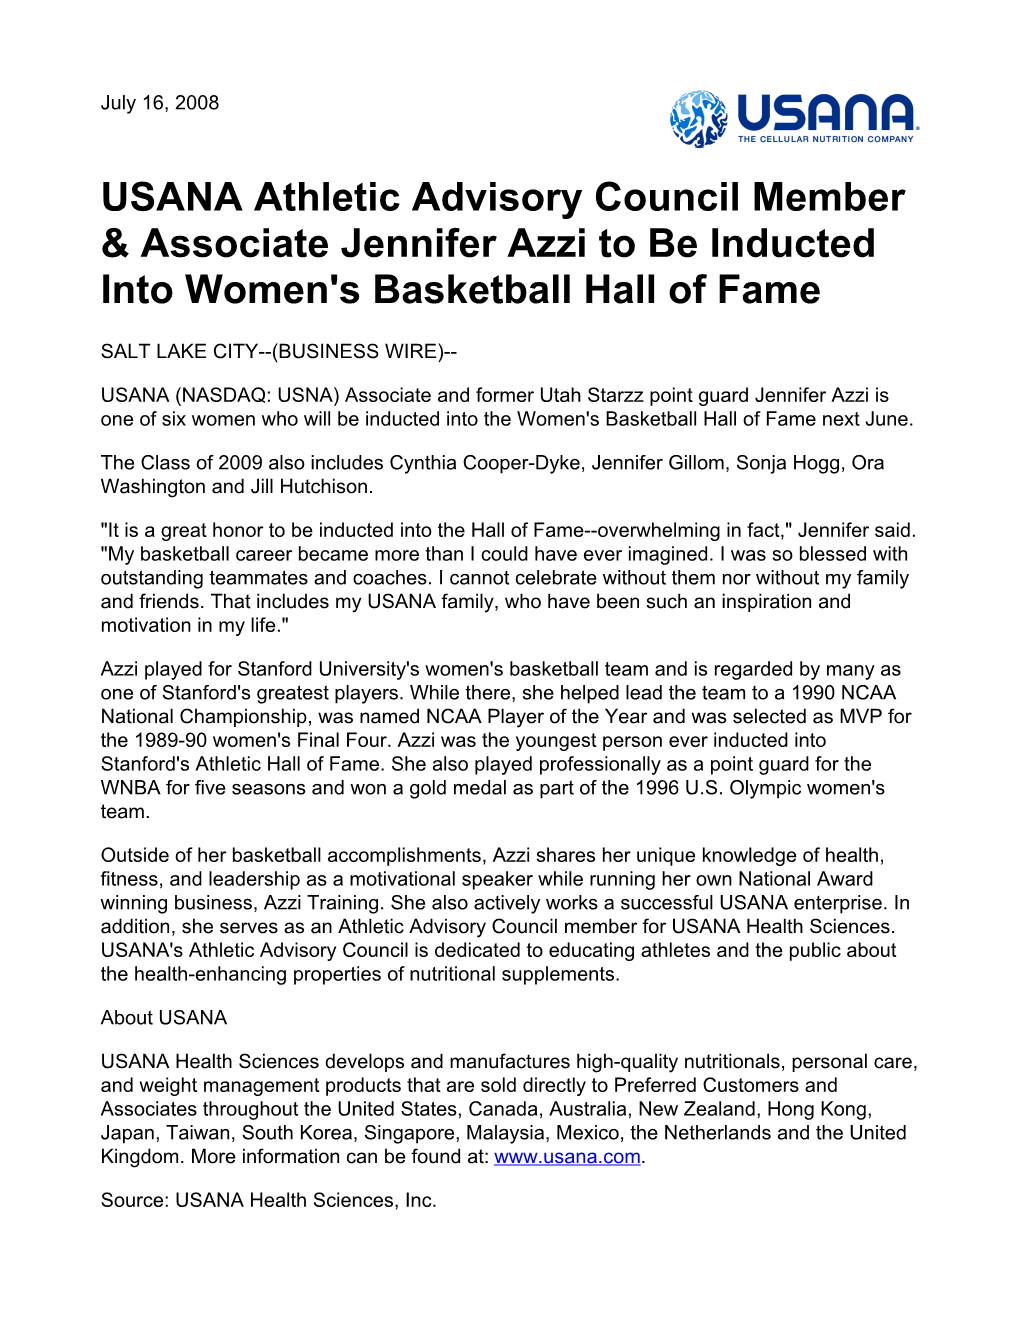 USANA Athletic Advisory Council Member & Associate Jennifer Azzi